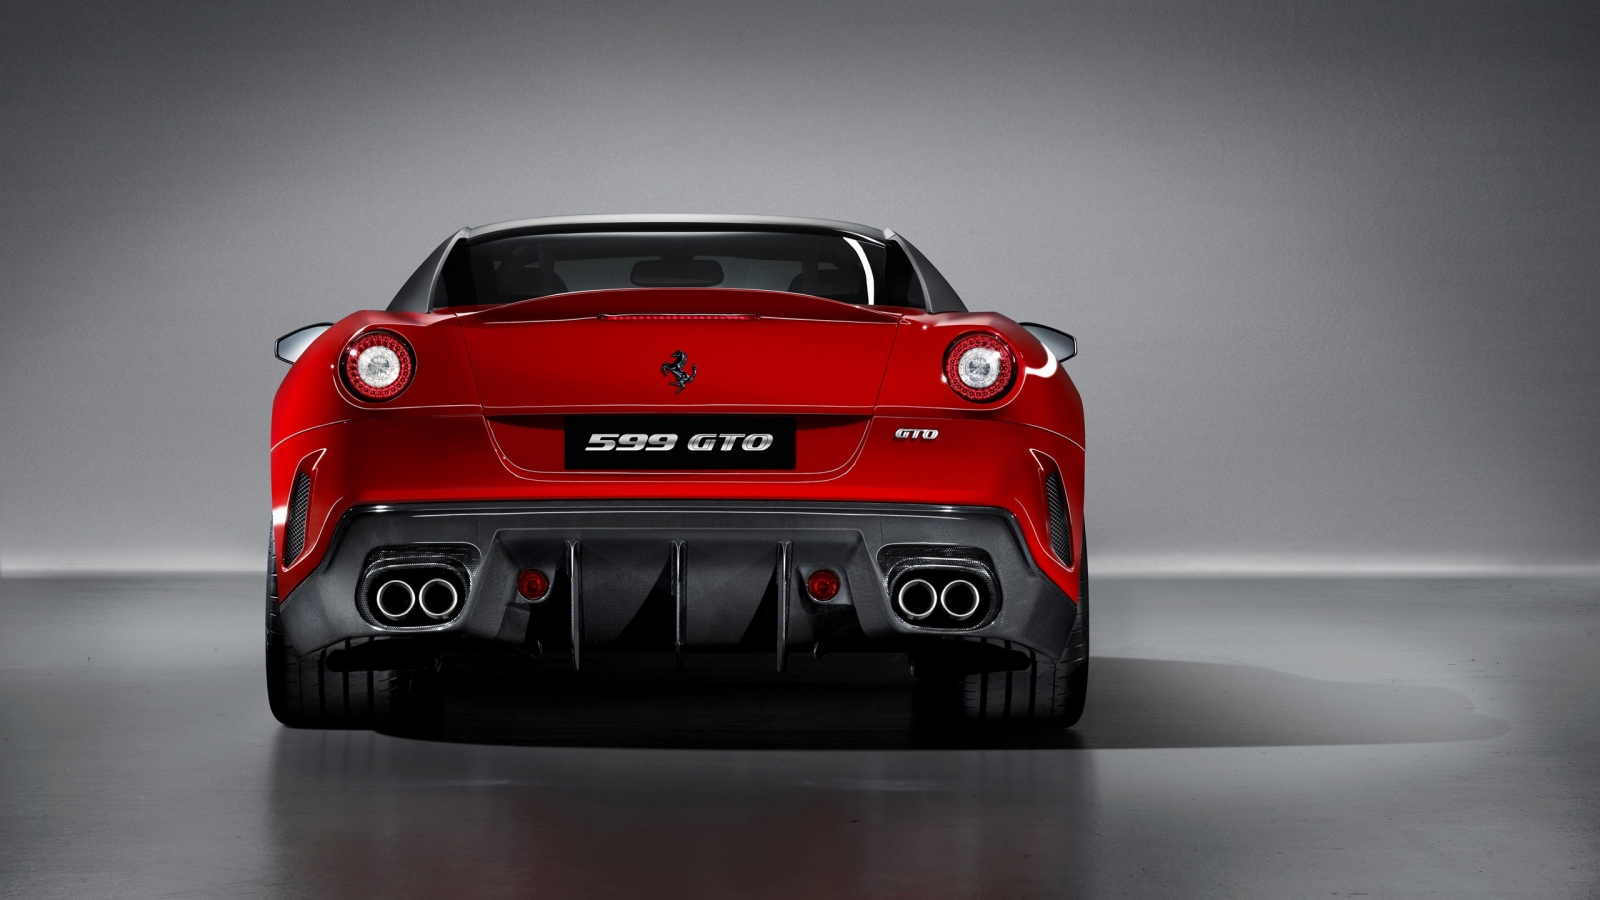 Ferrari 599 GTO Rear for 1600 x 900 HDTV resolution